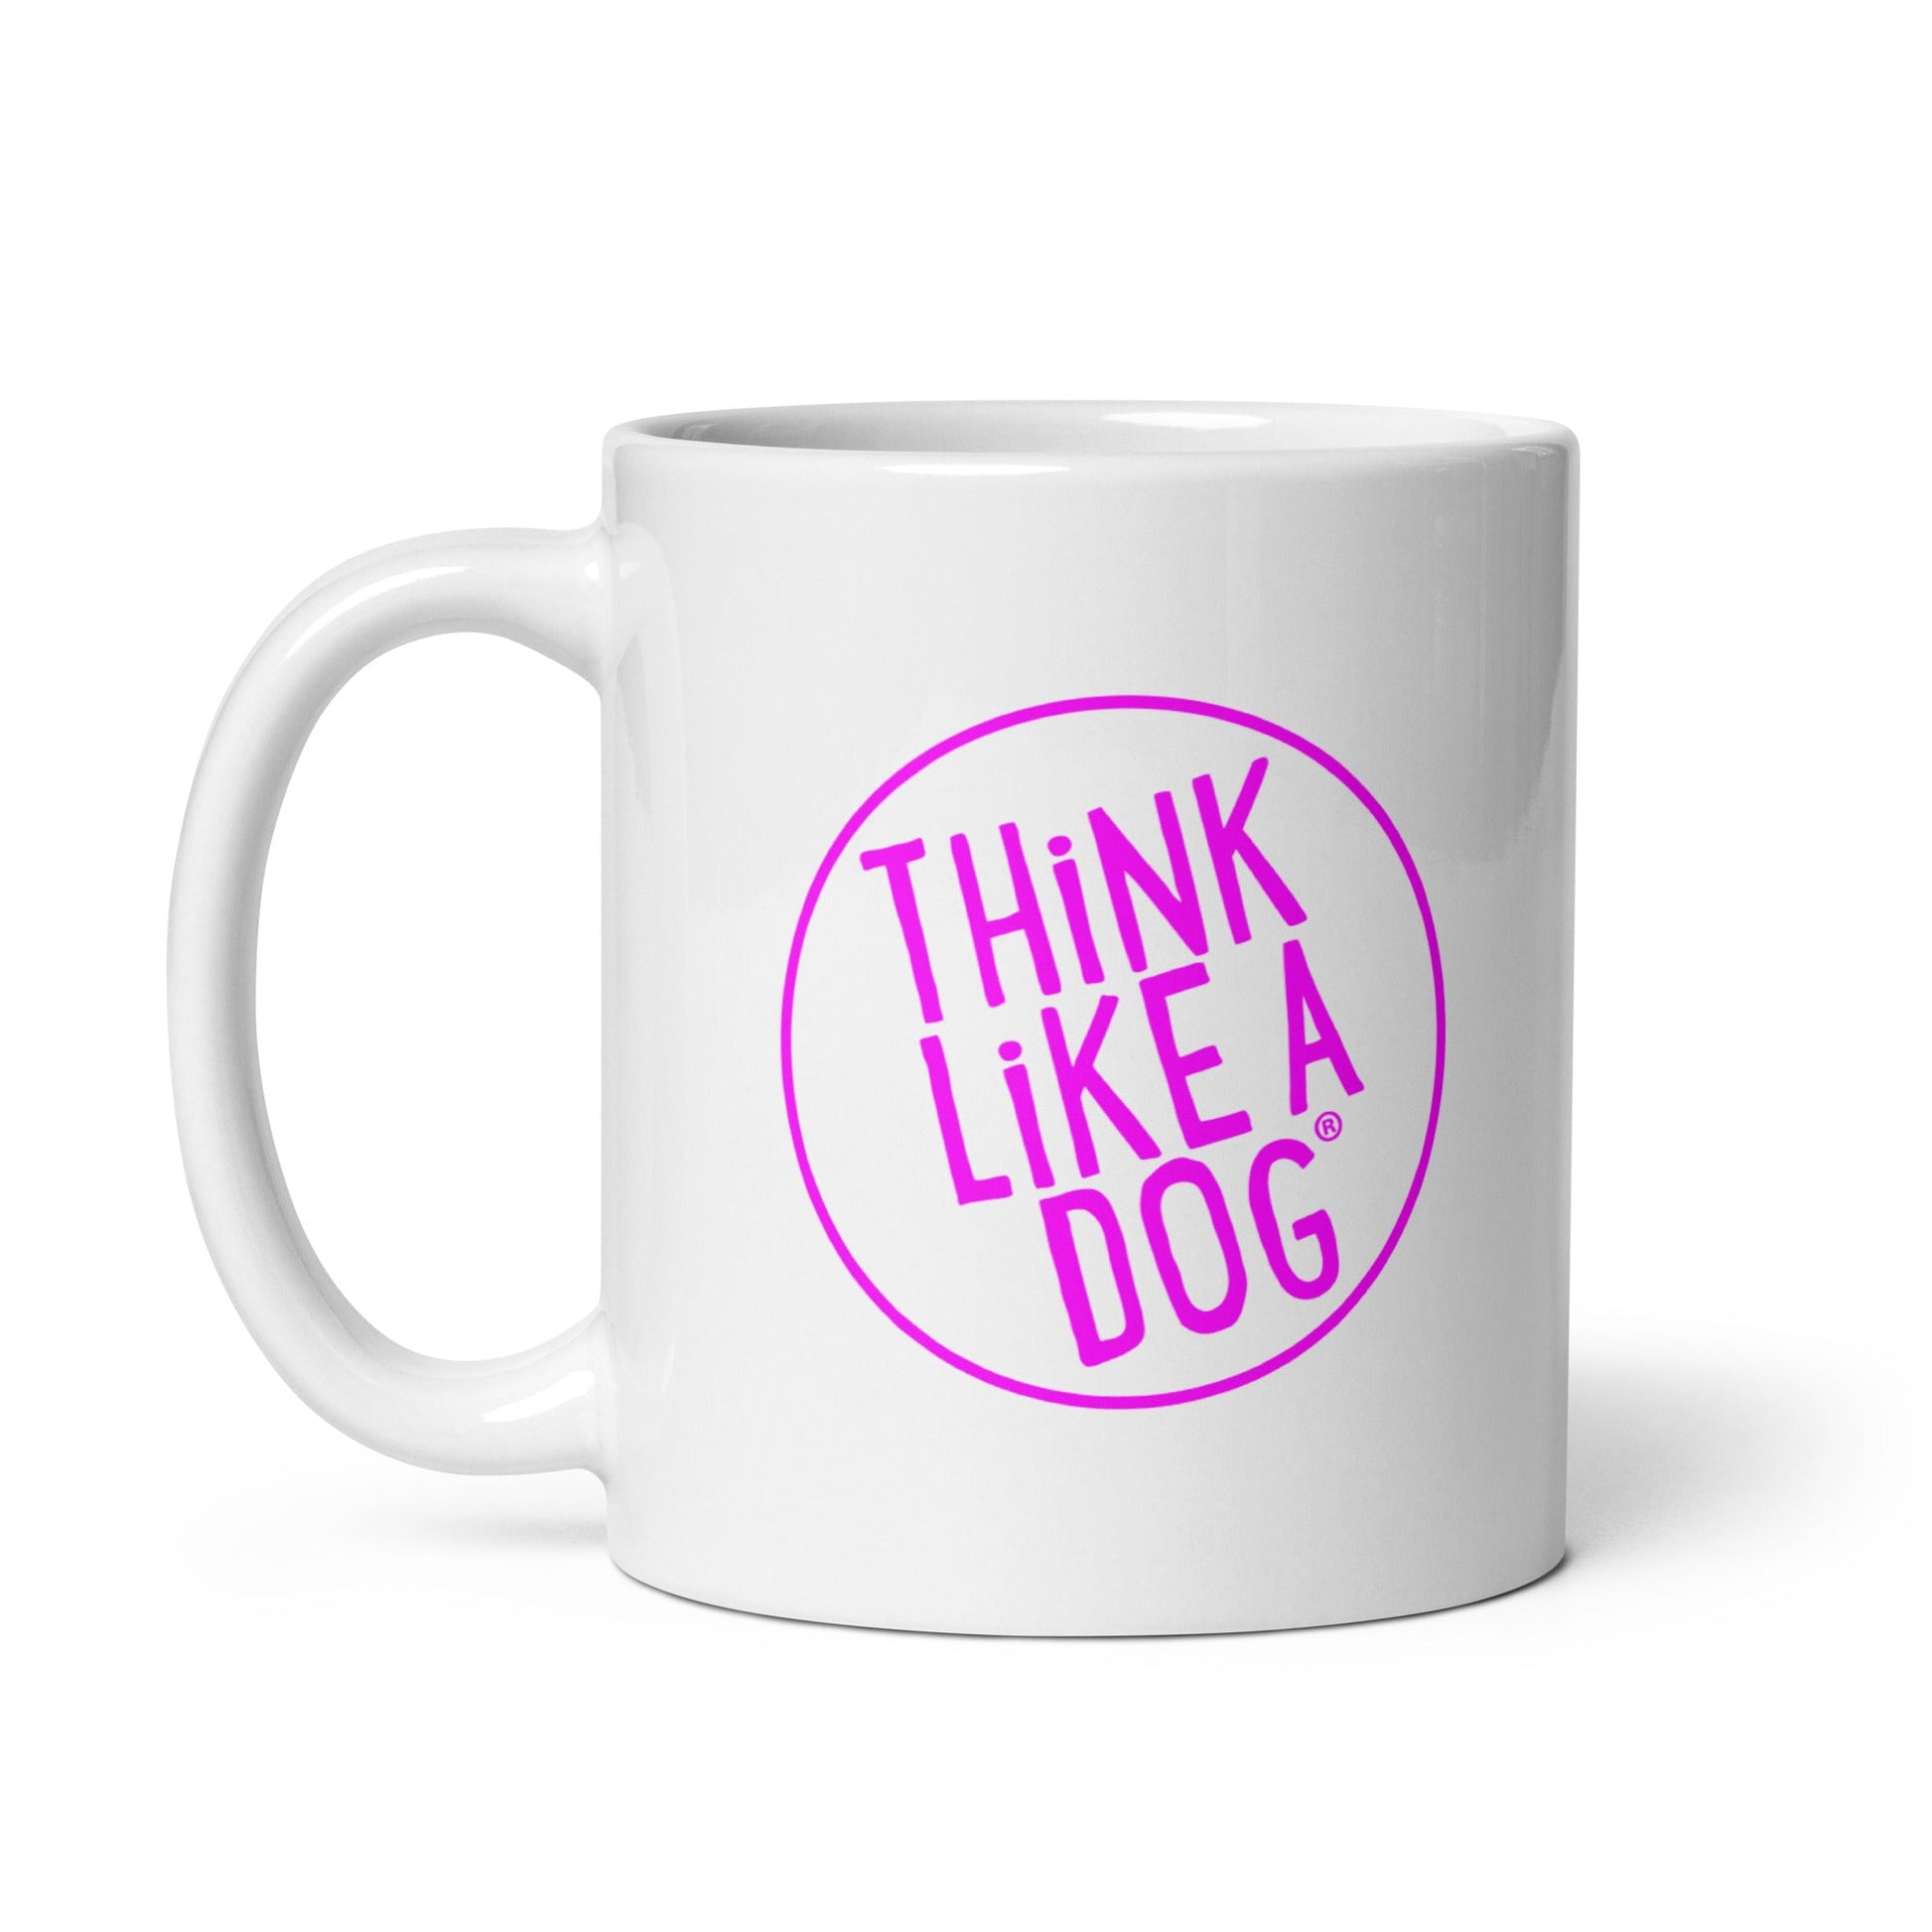 White Glossy Mug with the THiNK LiKE A DOG® Magenta Logo printed on it.